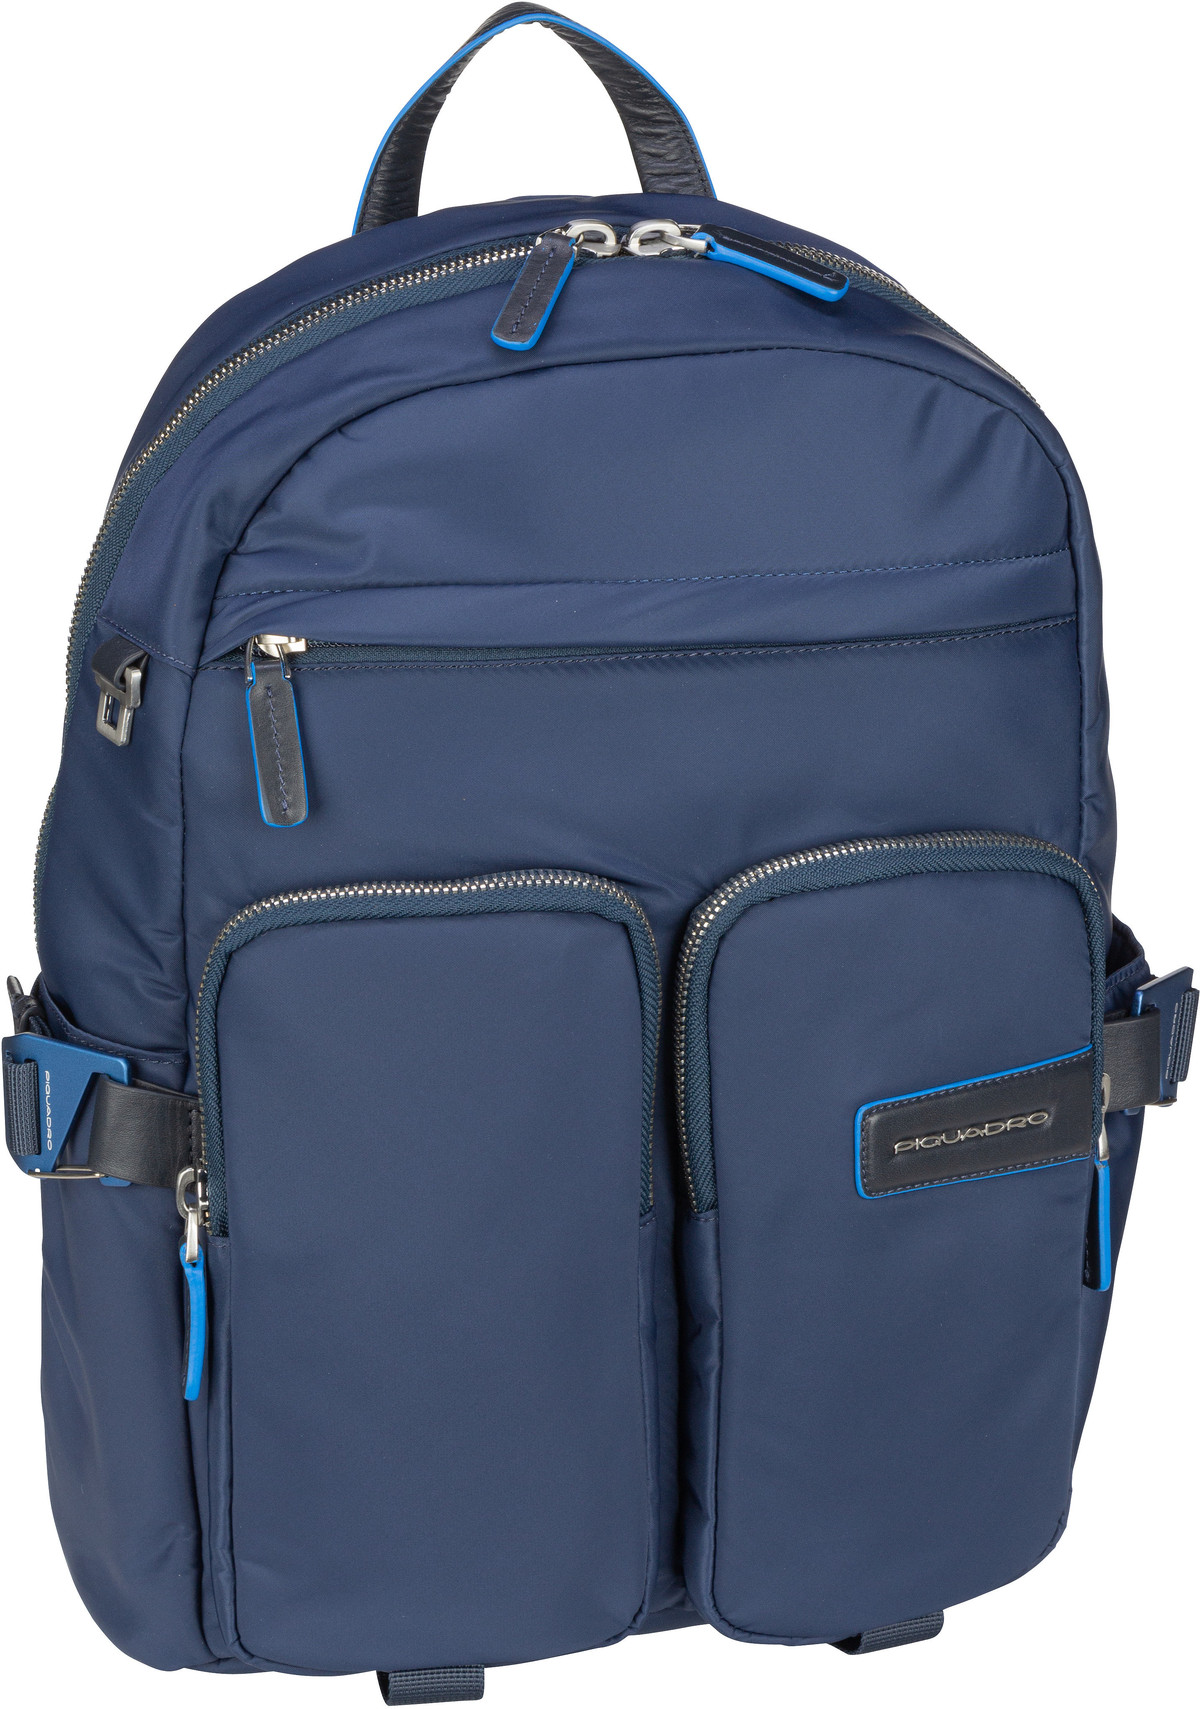 Piquadro PQ-RY Laptop Backpack 5699 RFID - Blu